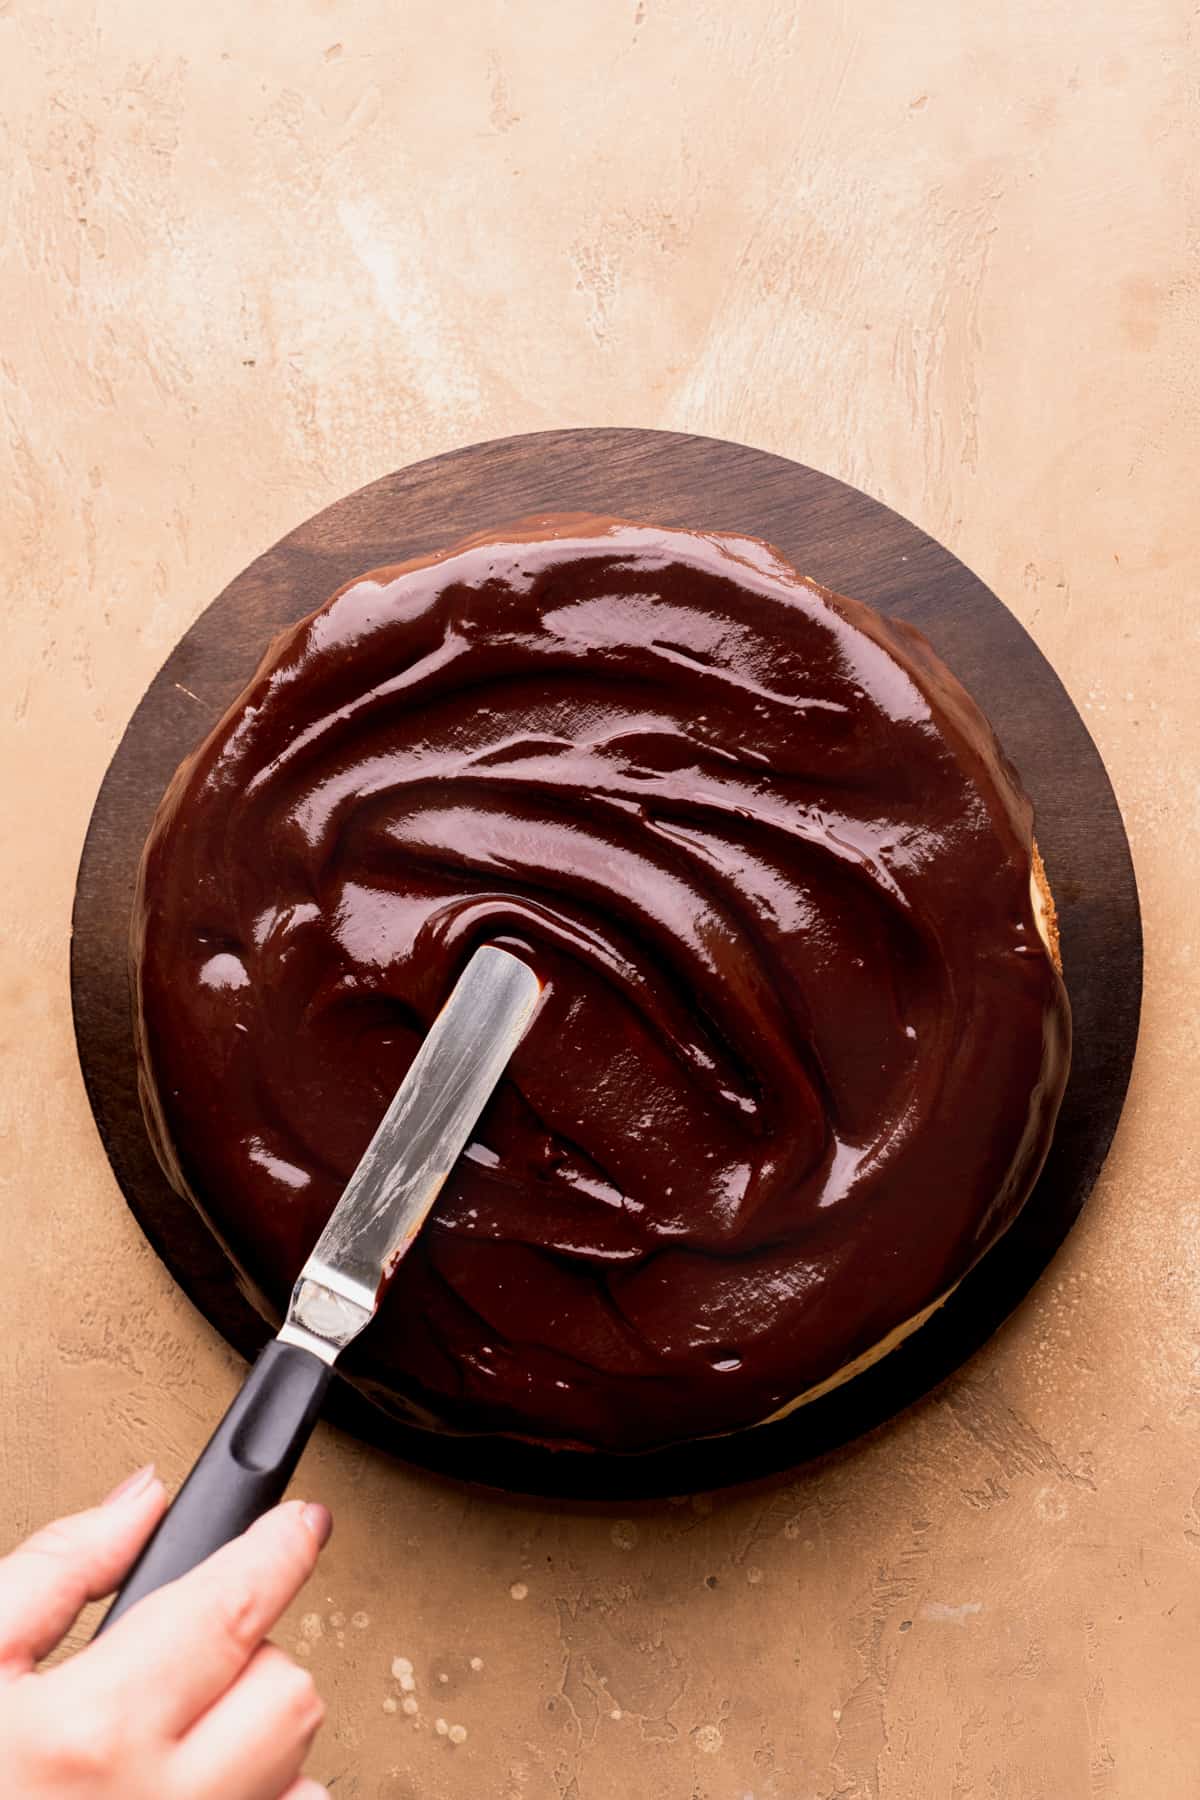 Chocolate ganache on top of cheesecake.